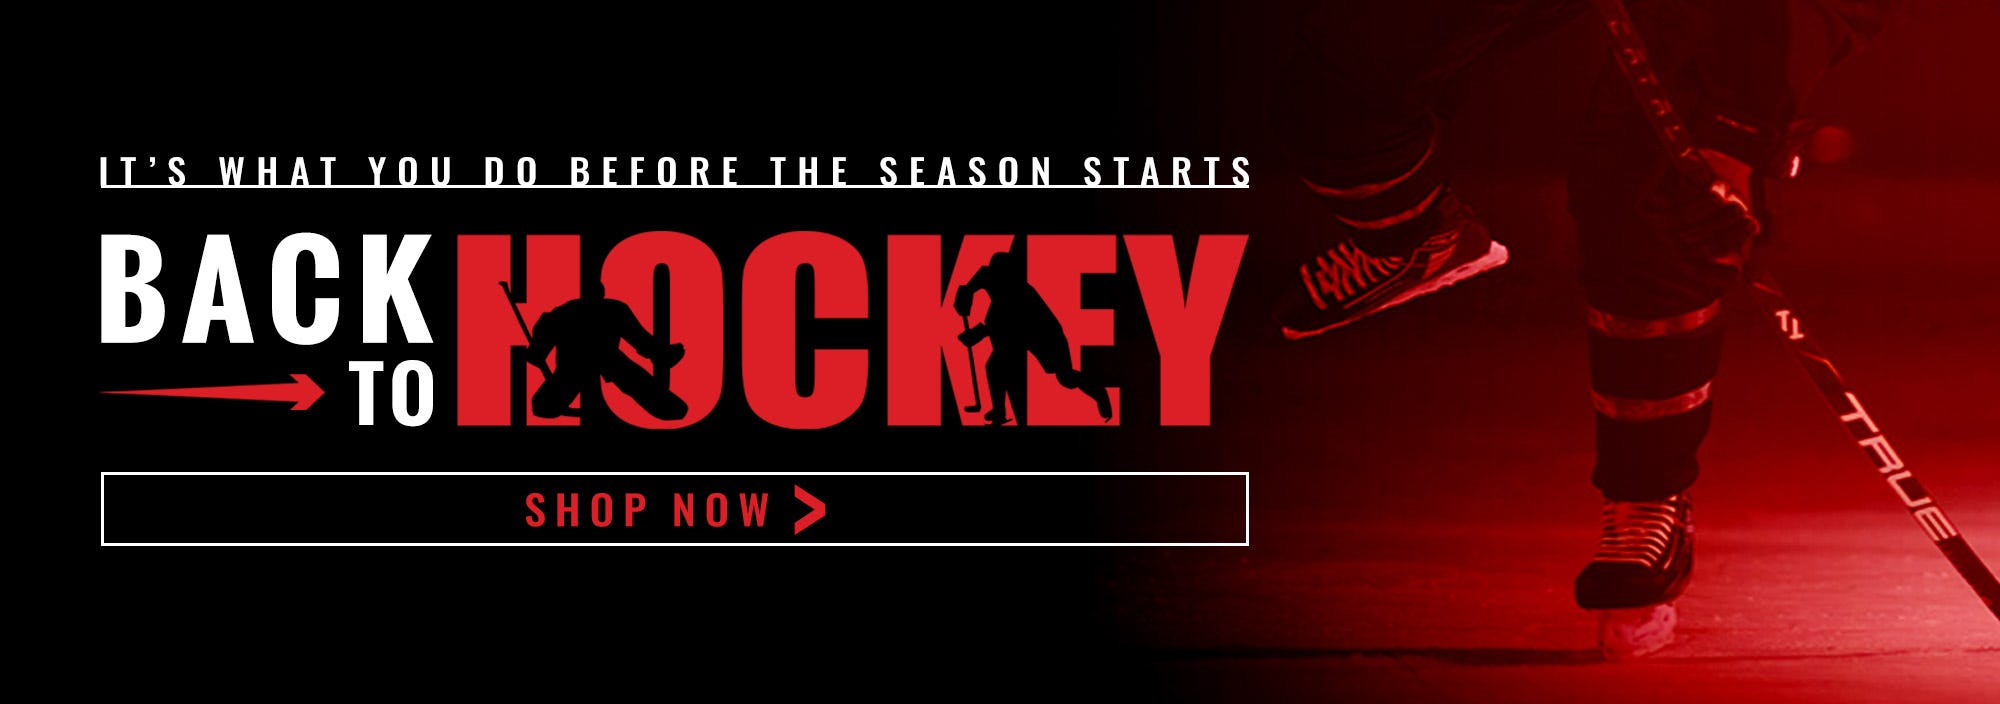 Hockey Equipment Best Online Store for Ice Hockey Gear